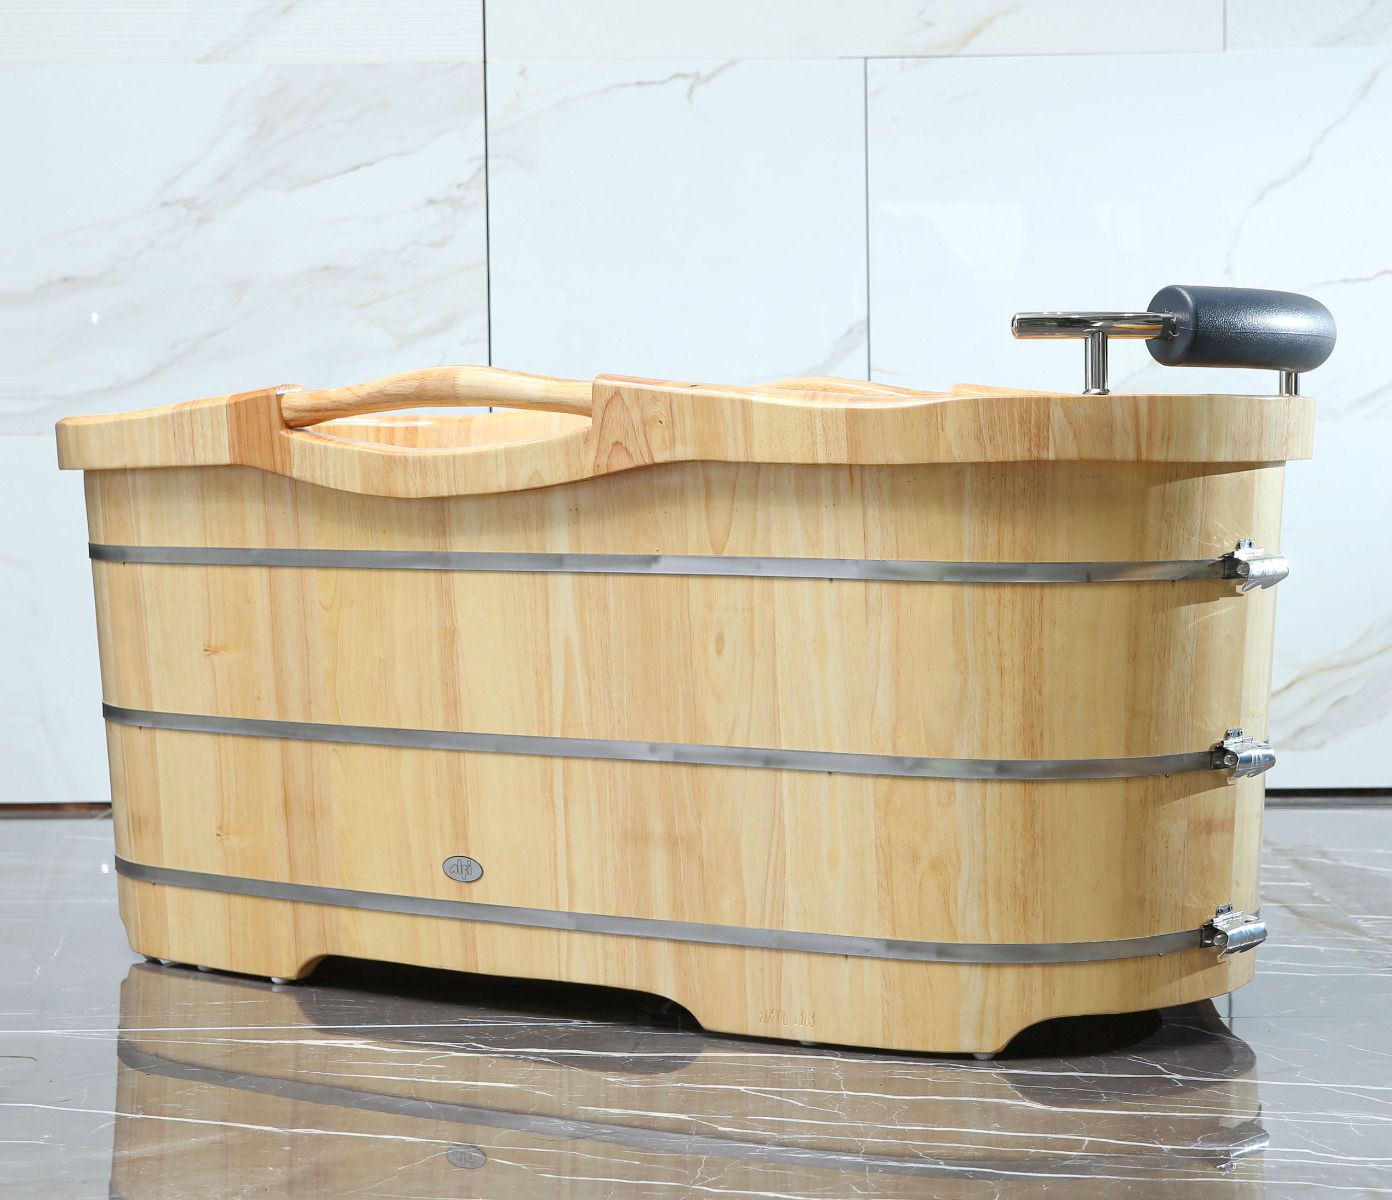 ALFI brand AB1163 61'' Free Standing Wooden BathTub with Headrest - Elite Vitality